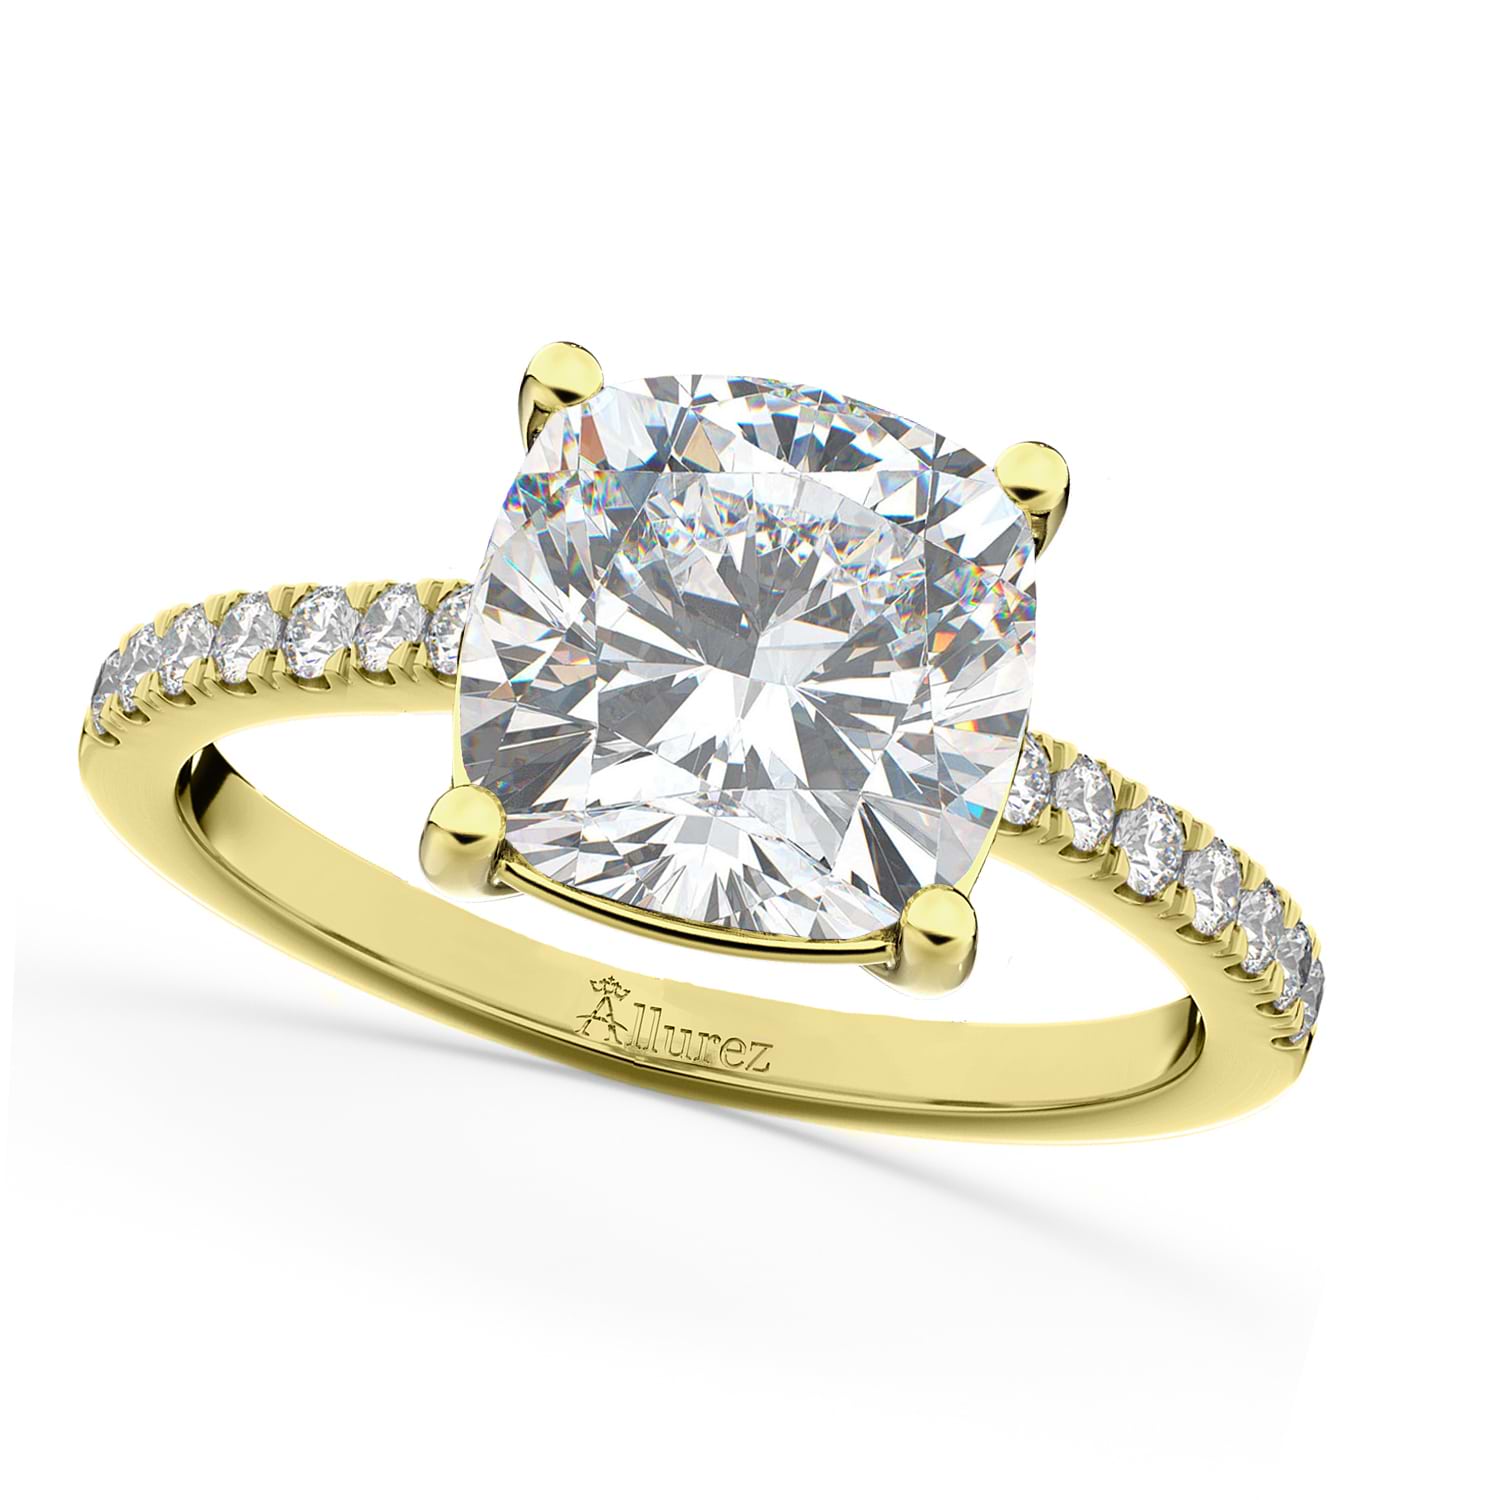 Cushion Cut Diamond Engagement Ring 14k Yellow Gold (2.25ct)